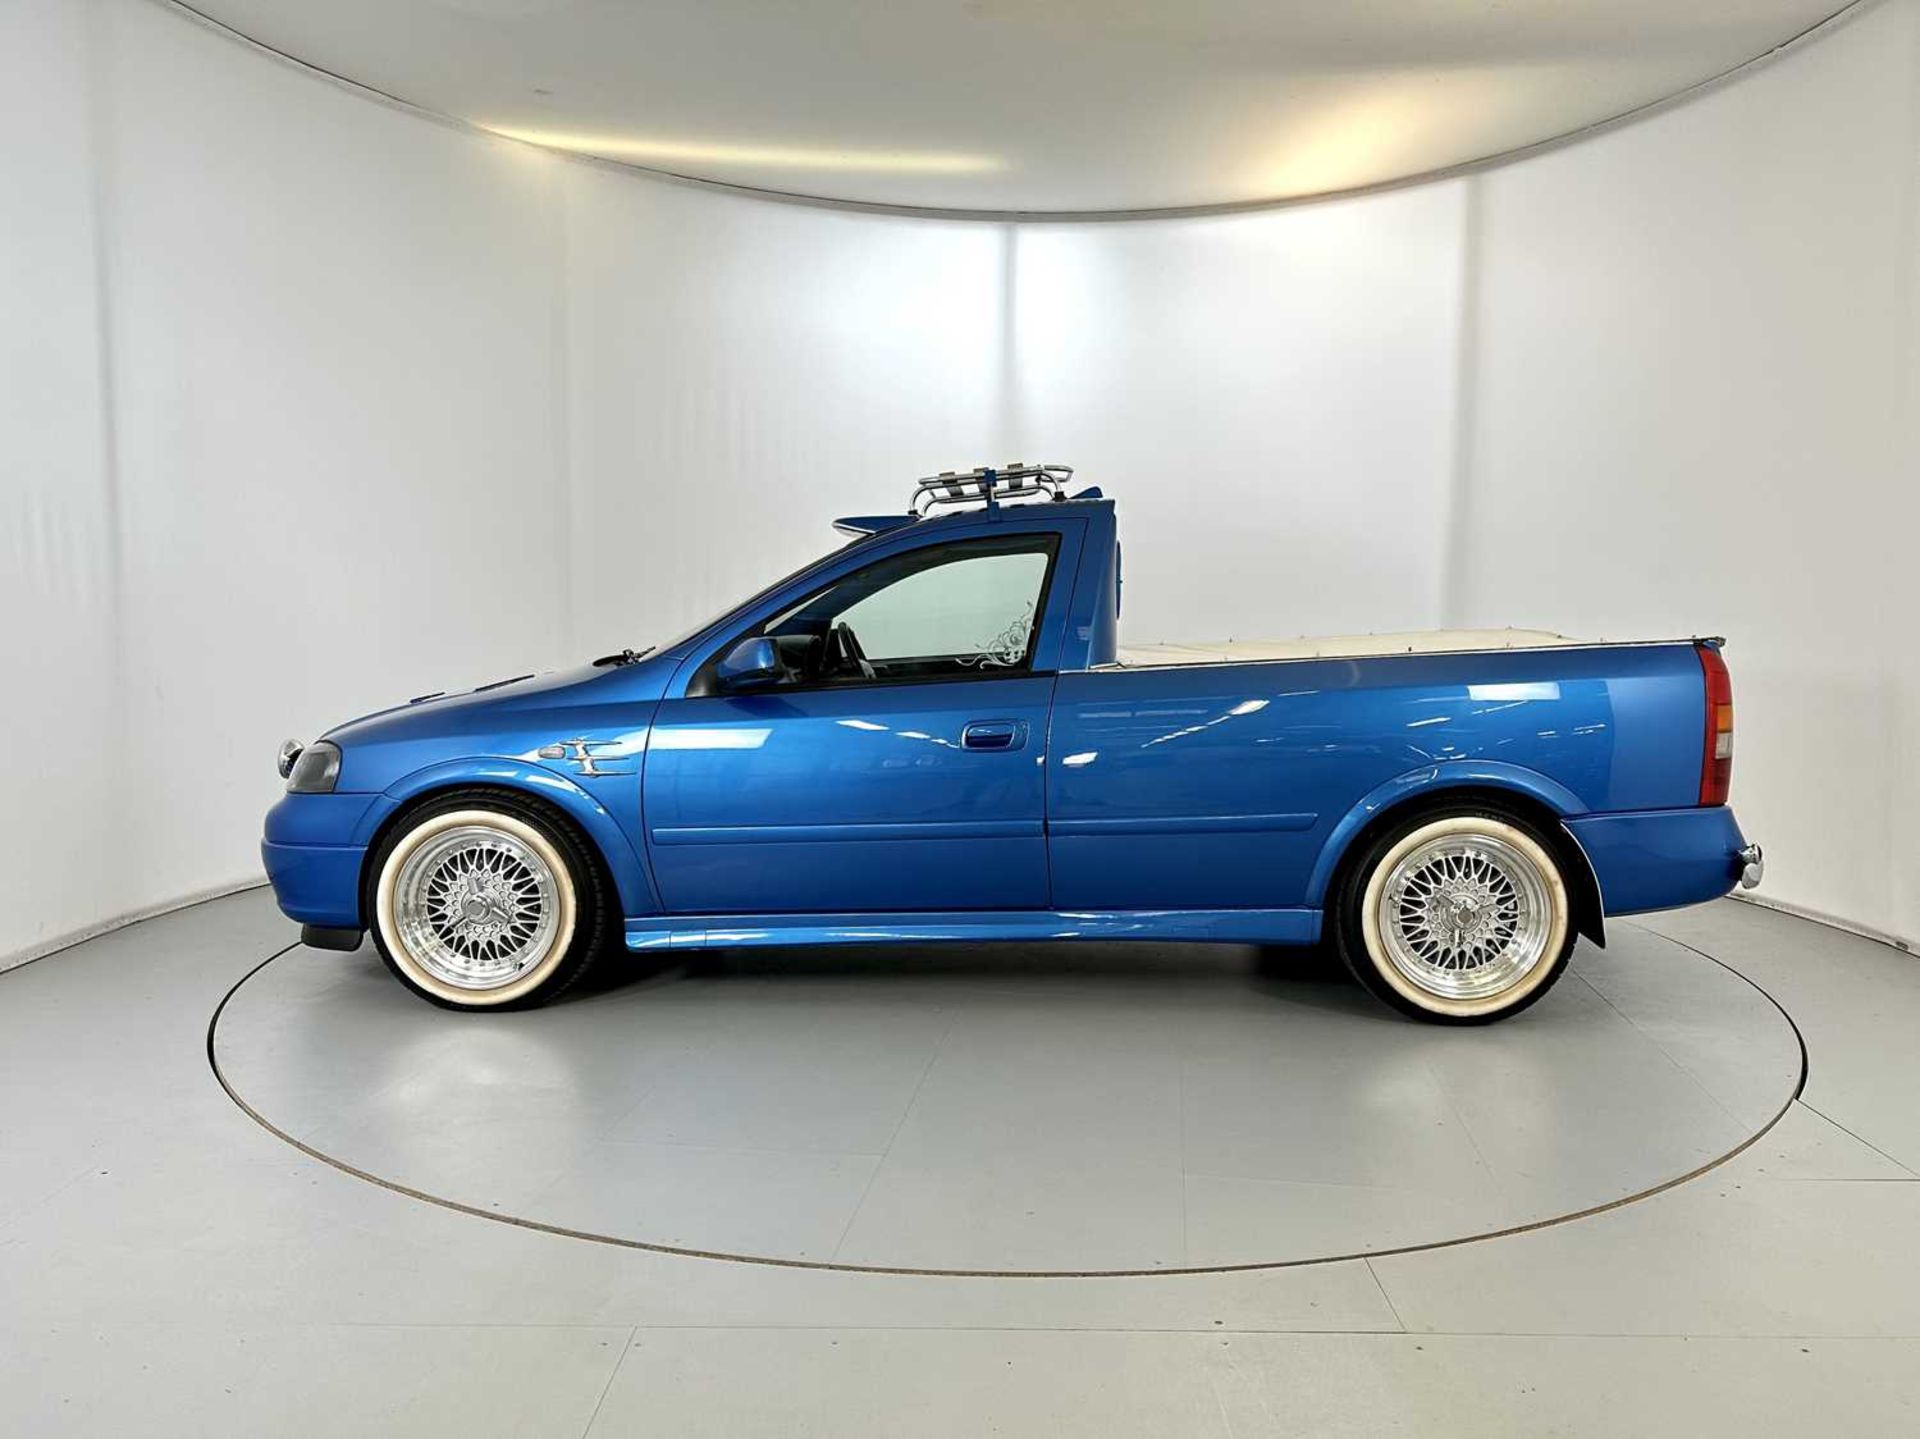 2000 Vauxhall Astra Pickup - Image 5 of 30